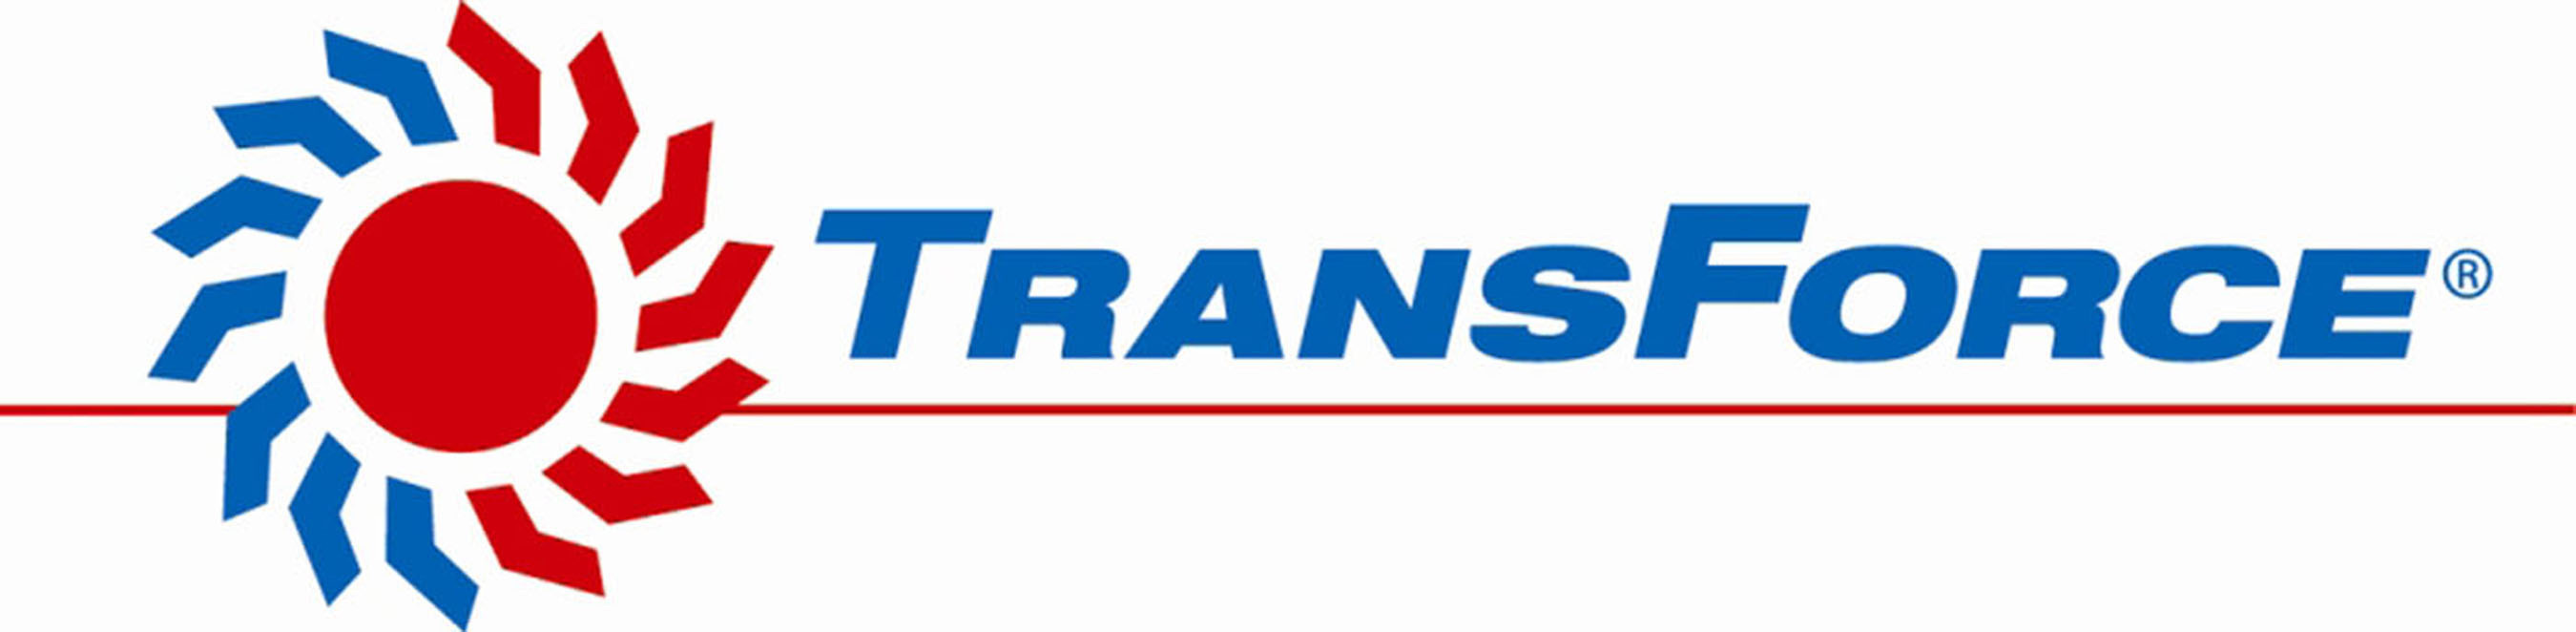 TransForce, Inc. continues its expansion plan into Southern Florida (PRNewsFoto/)